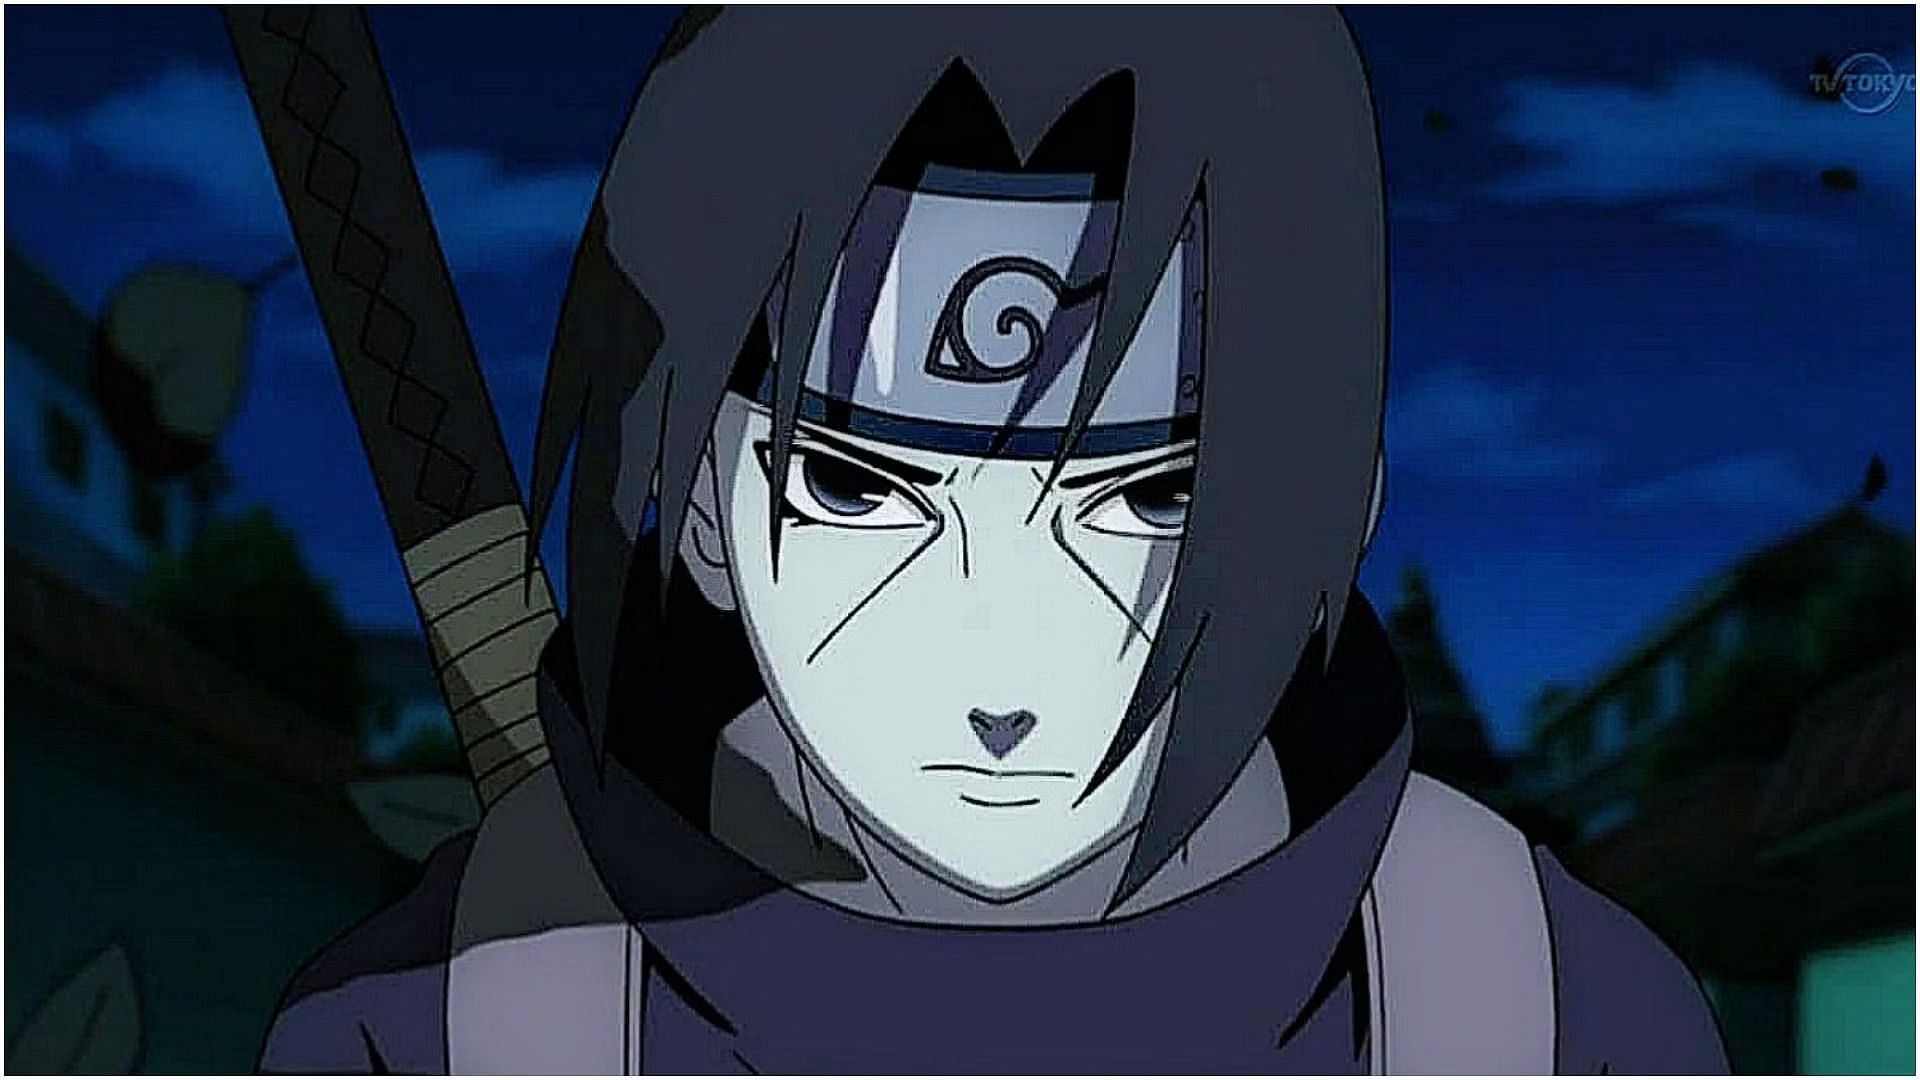 Itachi Uchiha as seen in the Naruto anime (image via Pierrot)